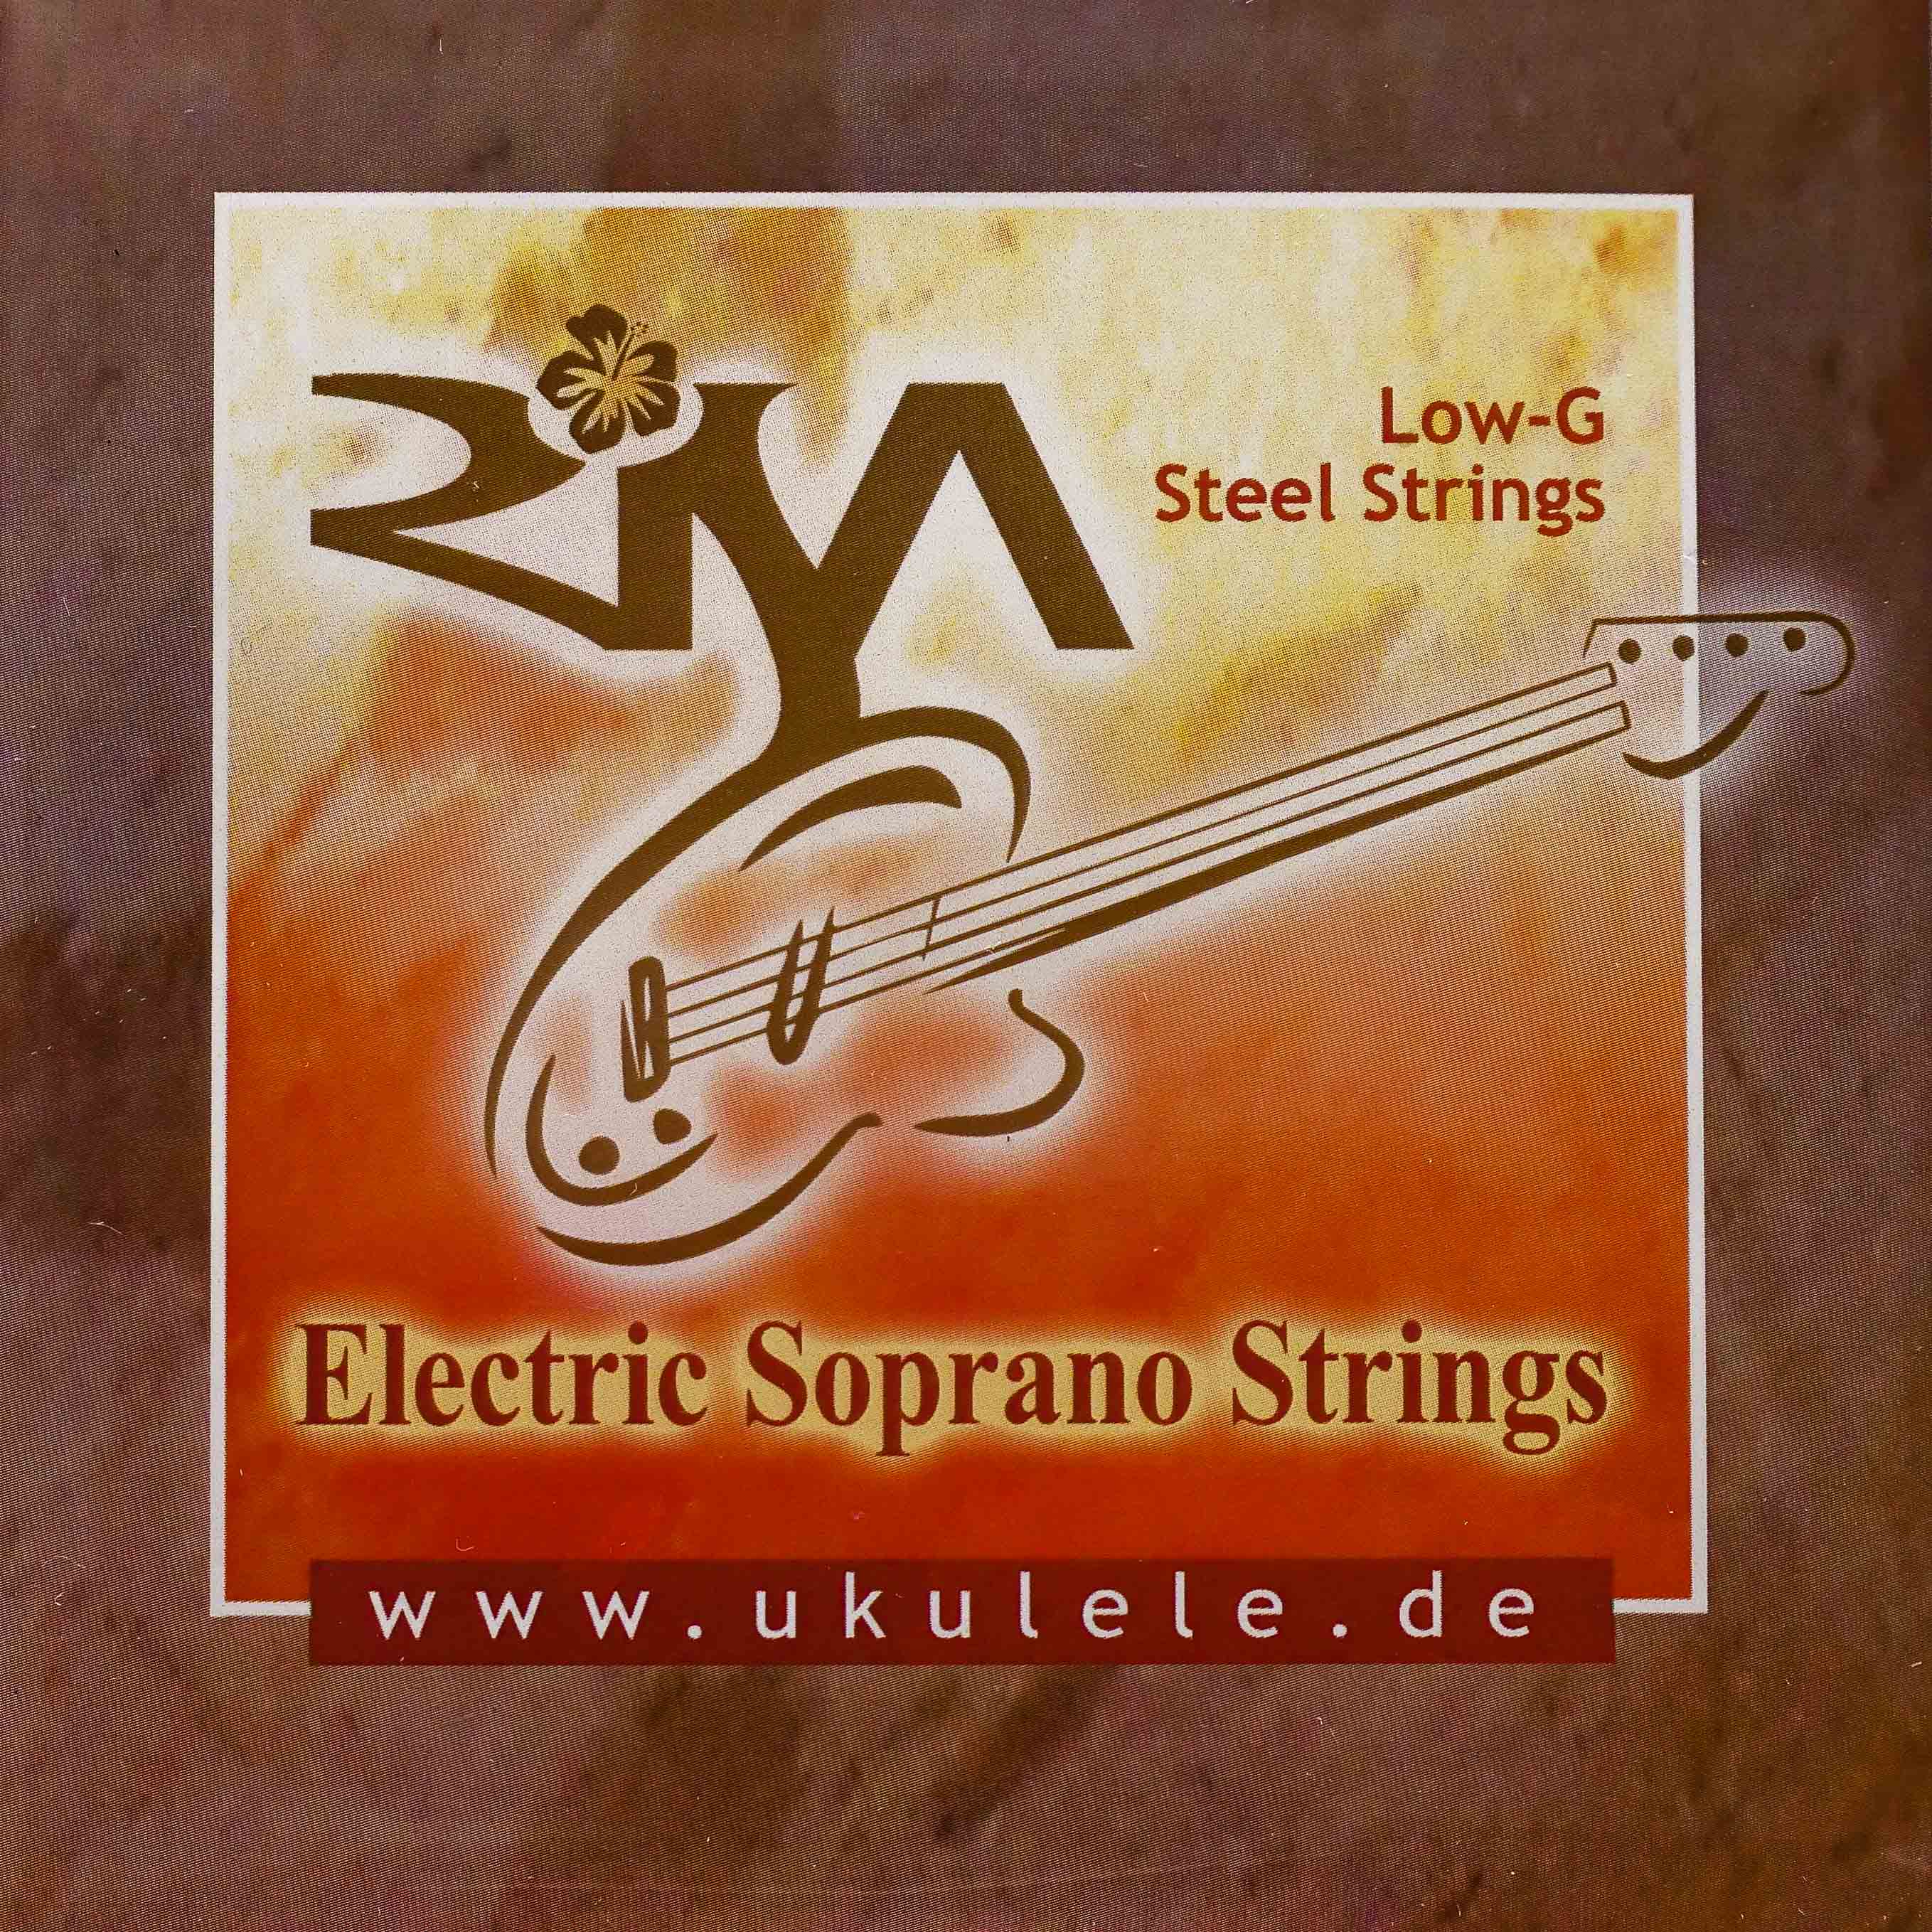 Etablering gået i stykker Astrolabe Risa Steel String Soprano Electric Ukulele Strings - Wound LOW G – Buy  Strings Online